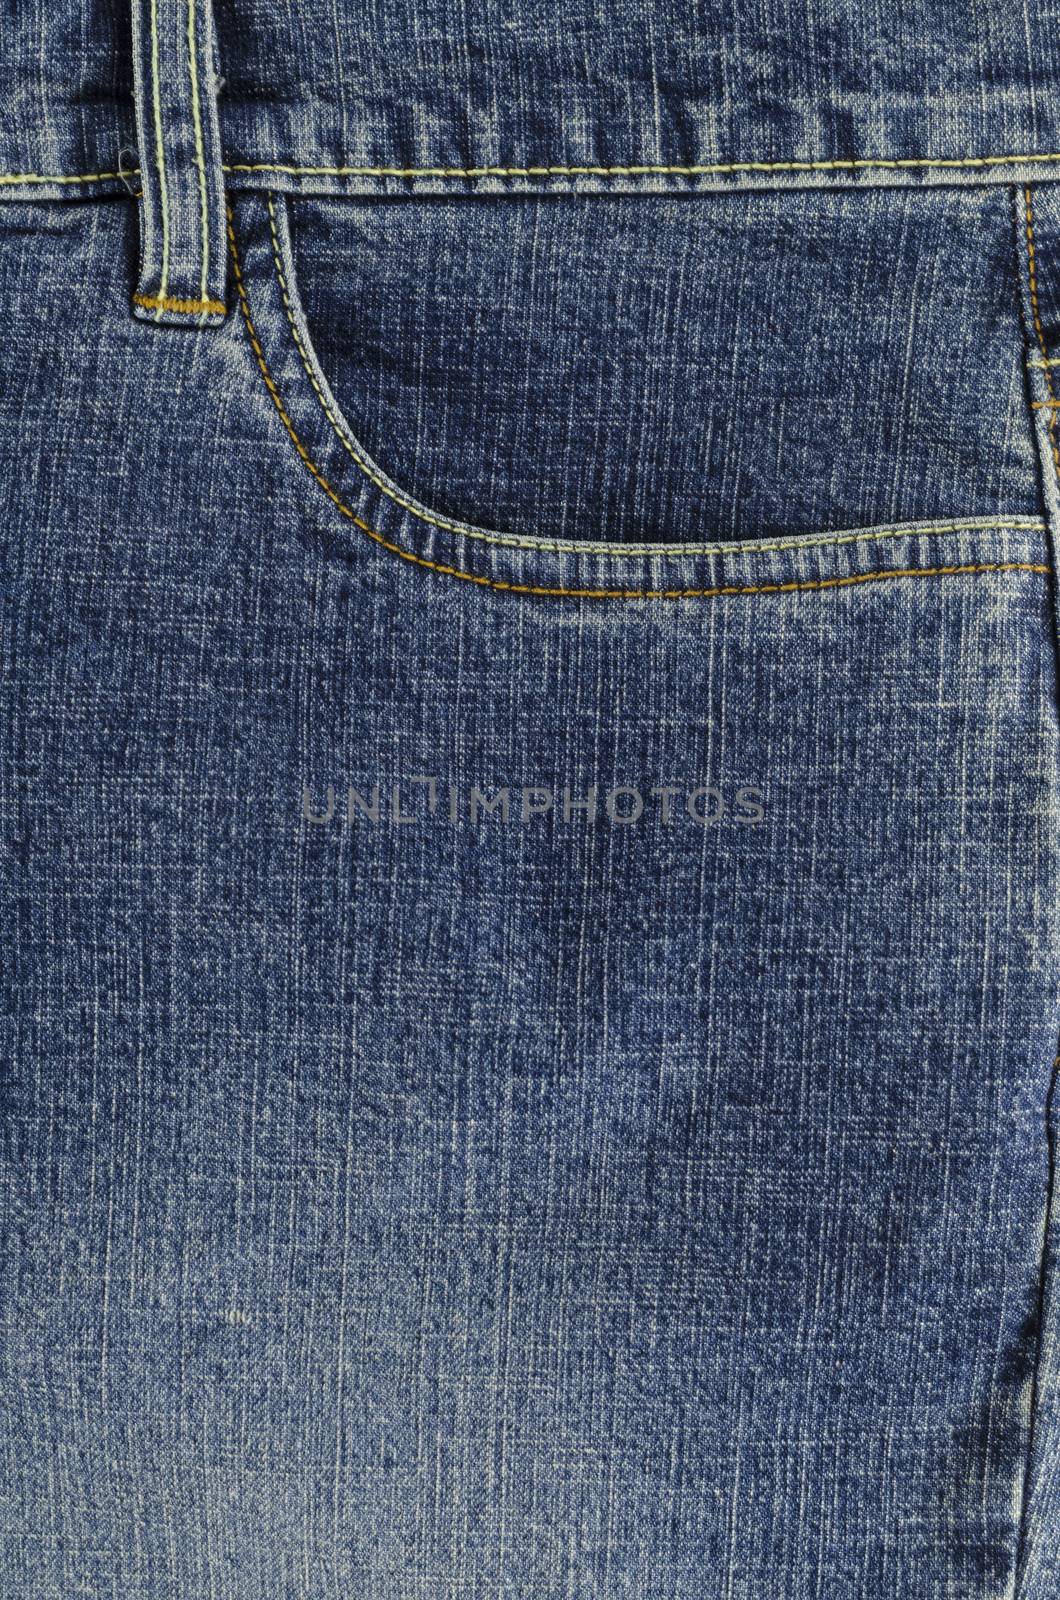 blue jeans pocket by ammza12